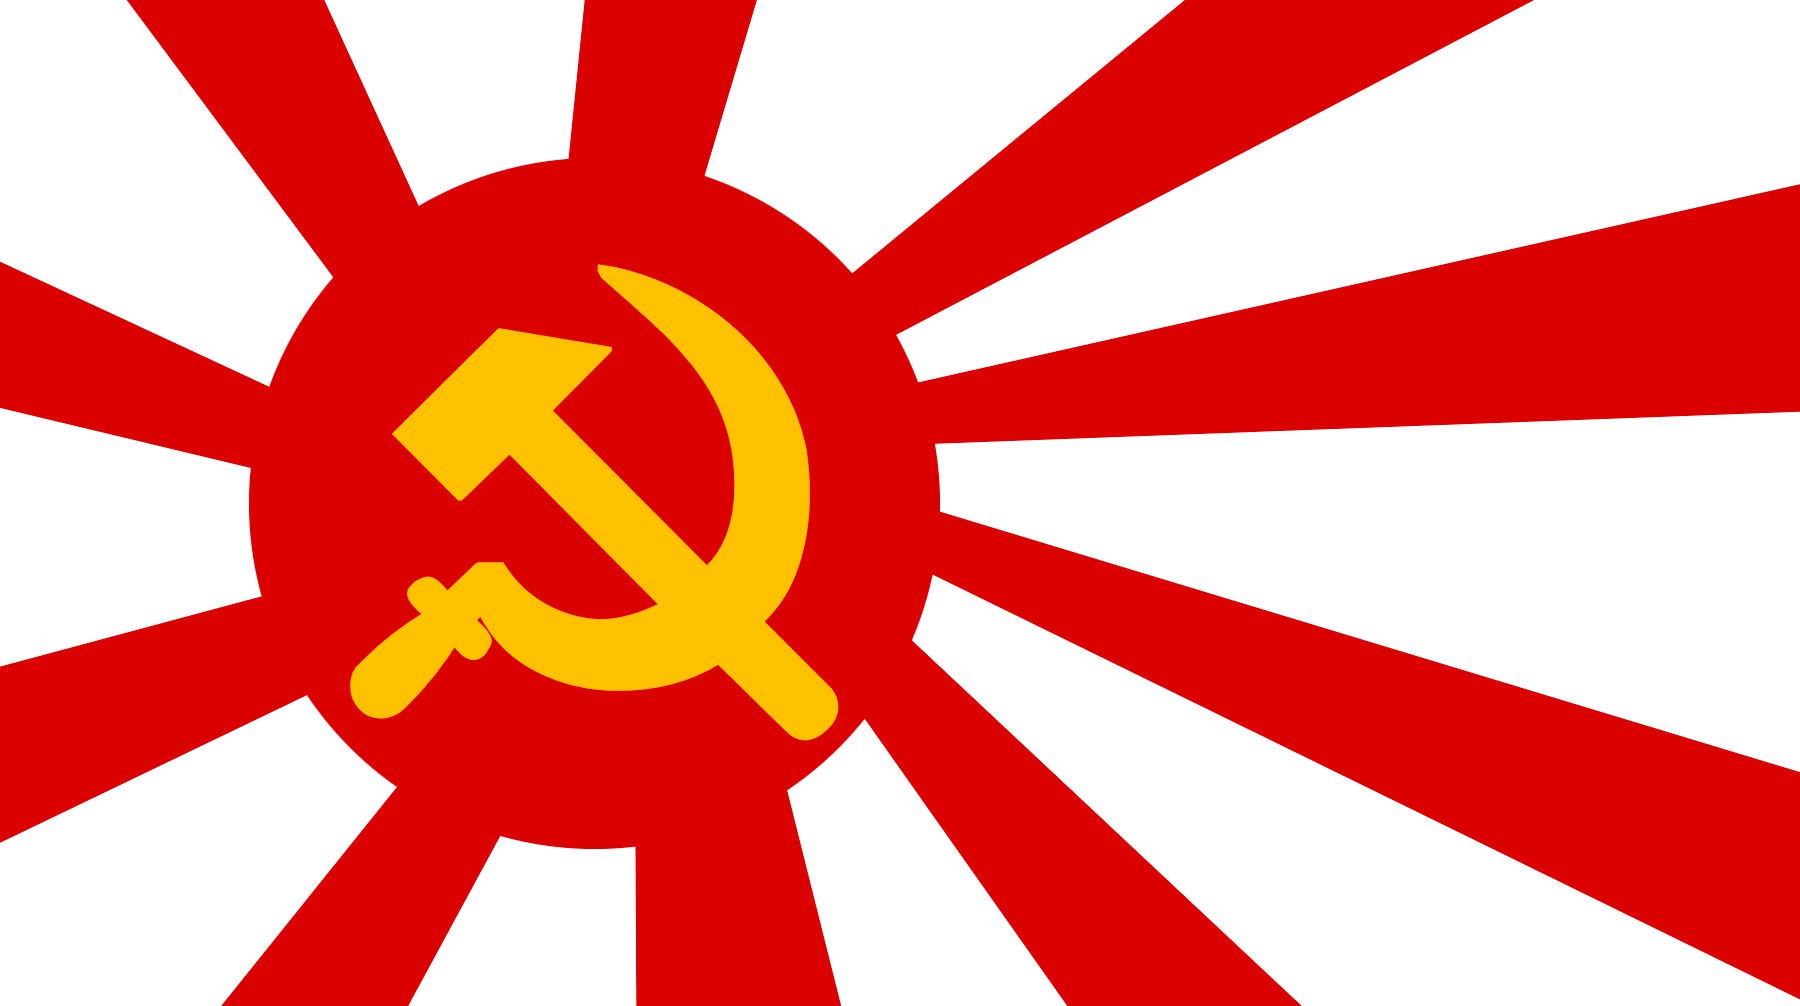 Dailystorm - В ЛДПР поддержат инициативу Компартии о праздновании Дня победы над Японией